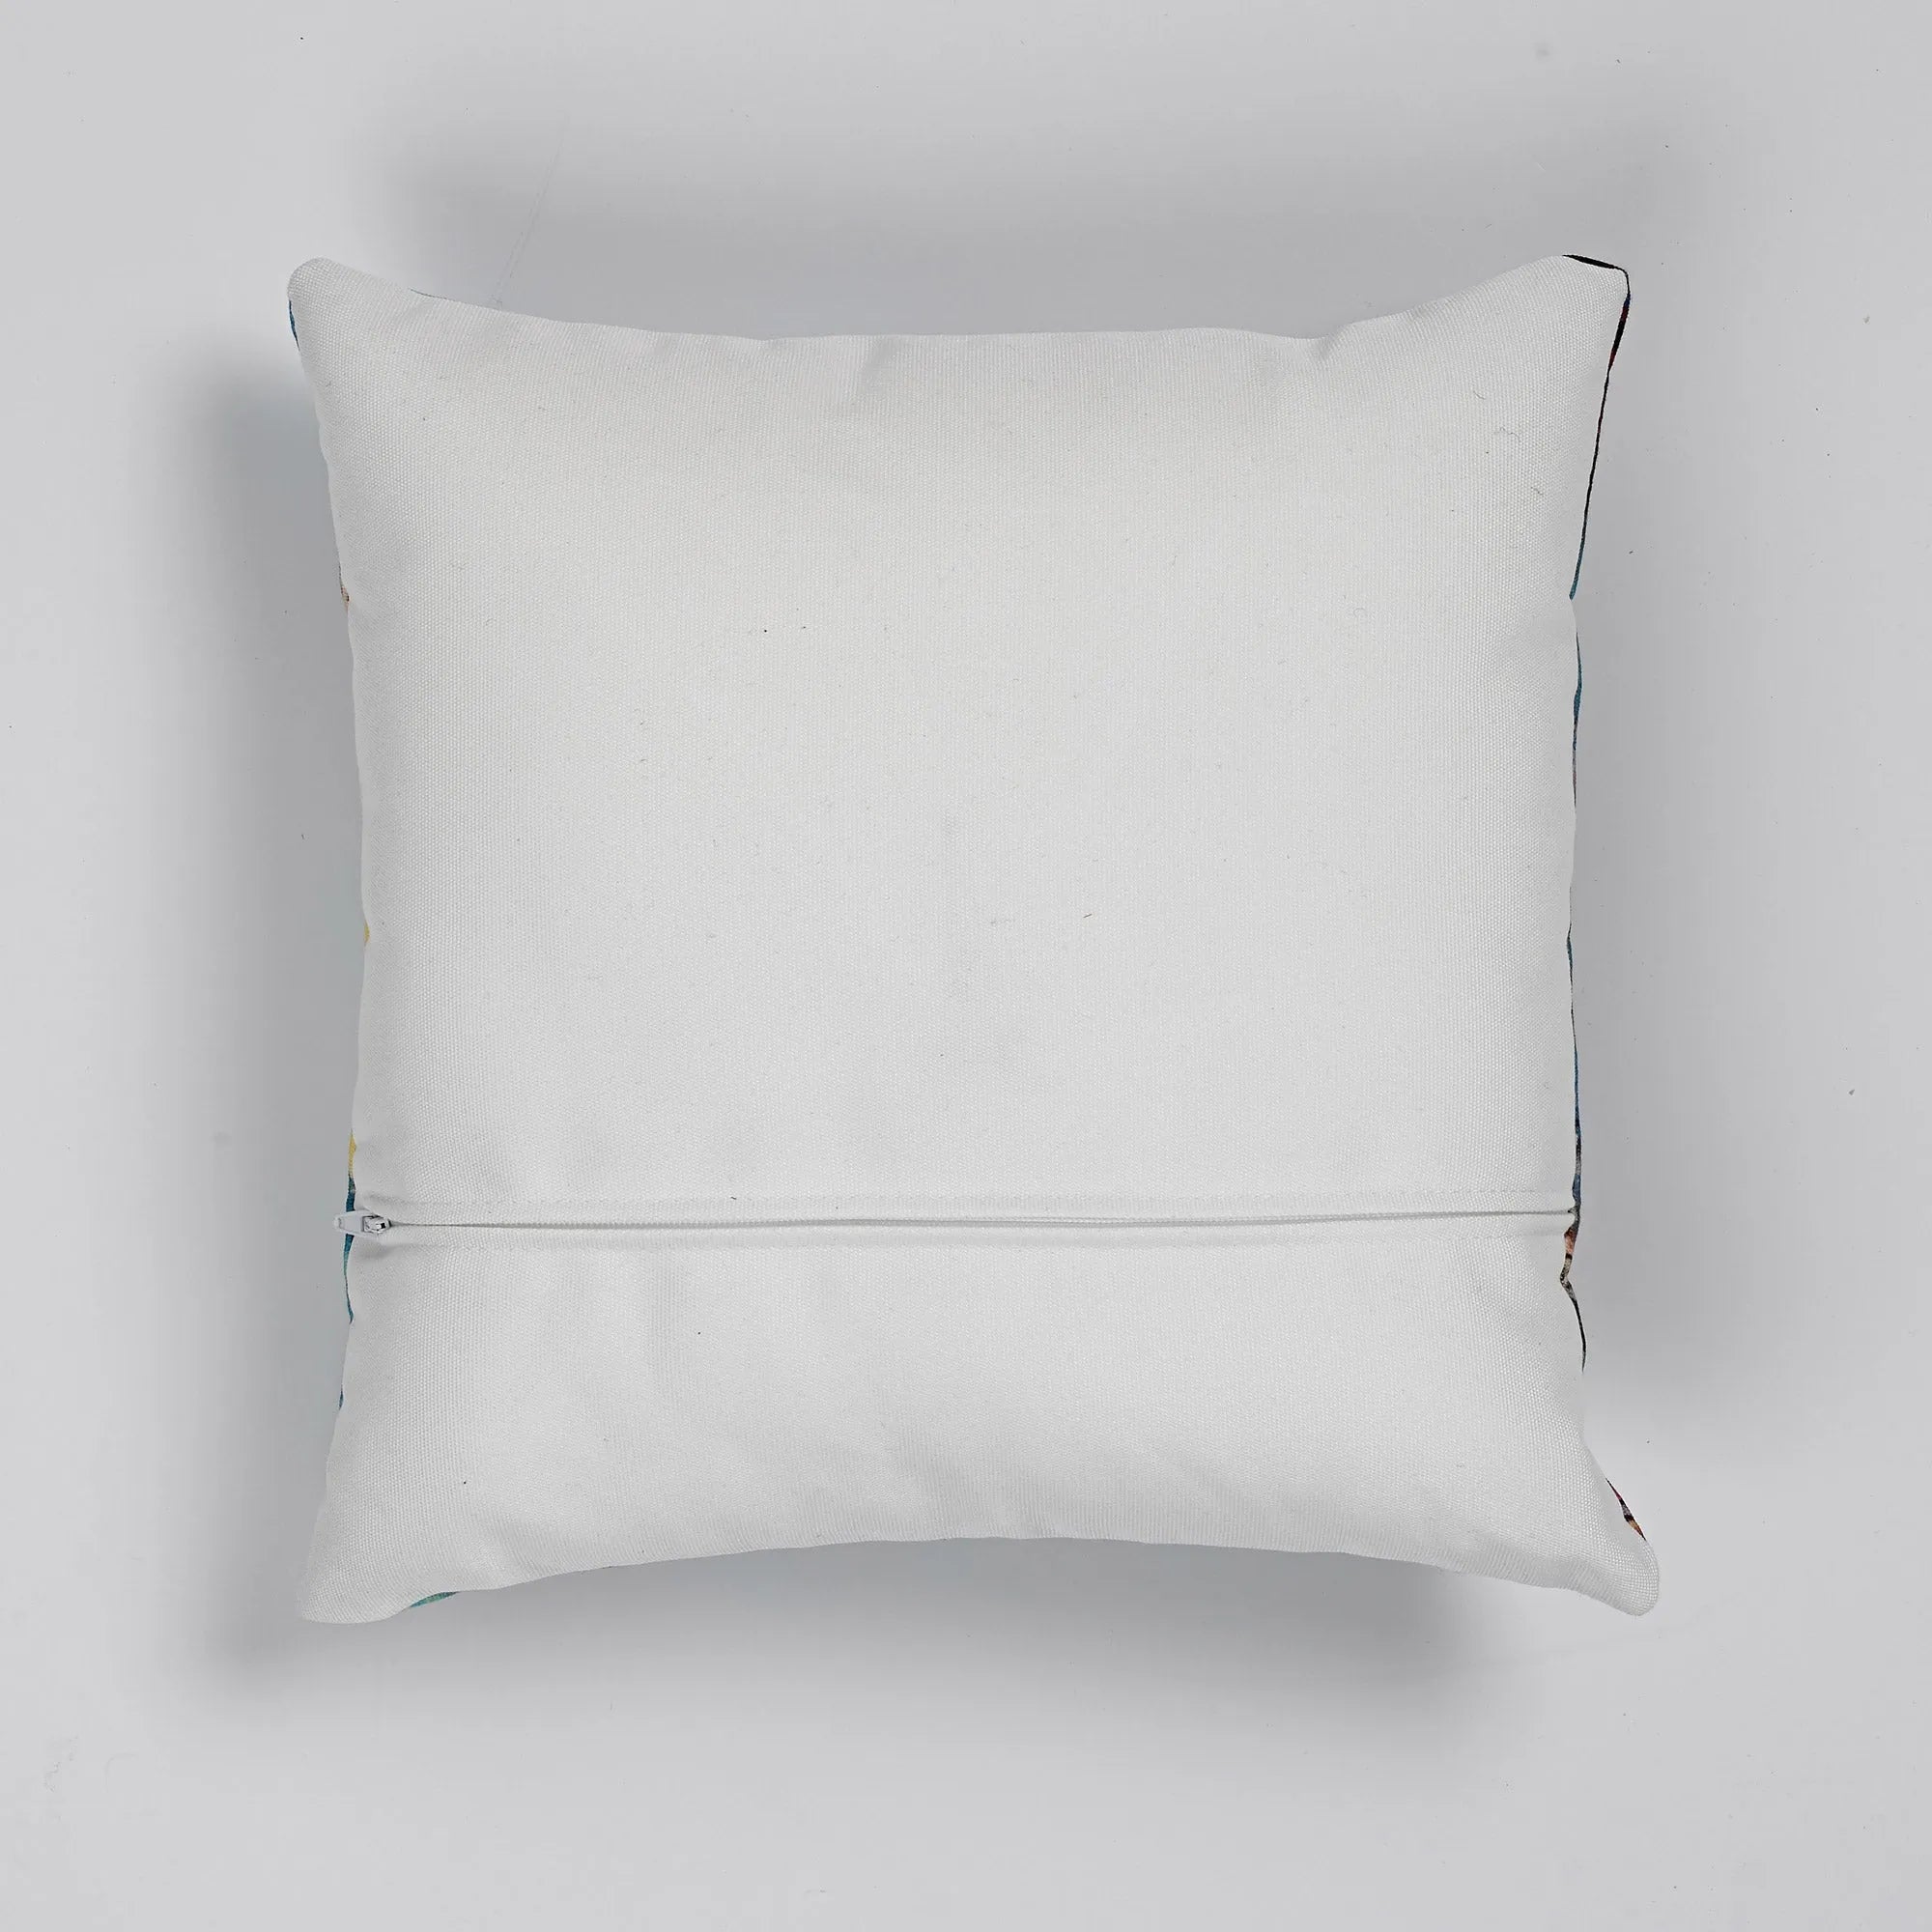 Martins-pêcheurs - Maurice Pillard Verneuil Cushion - Decorative Throw Pillow - Throw Pillows - Aesthetic Art